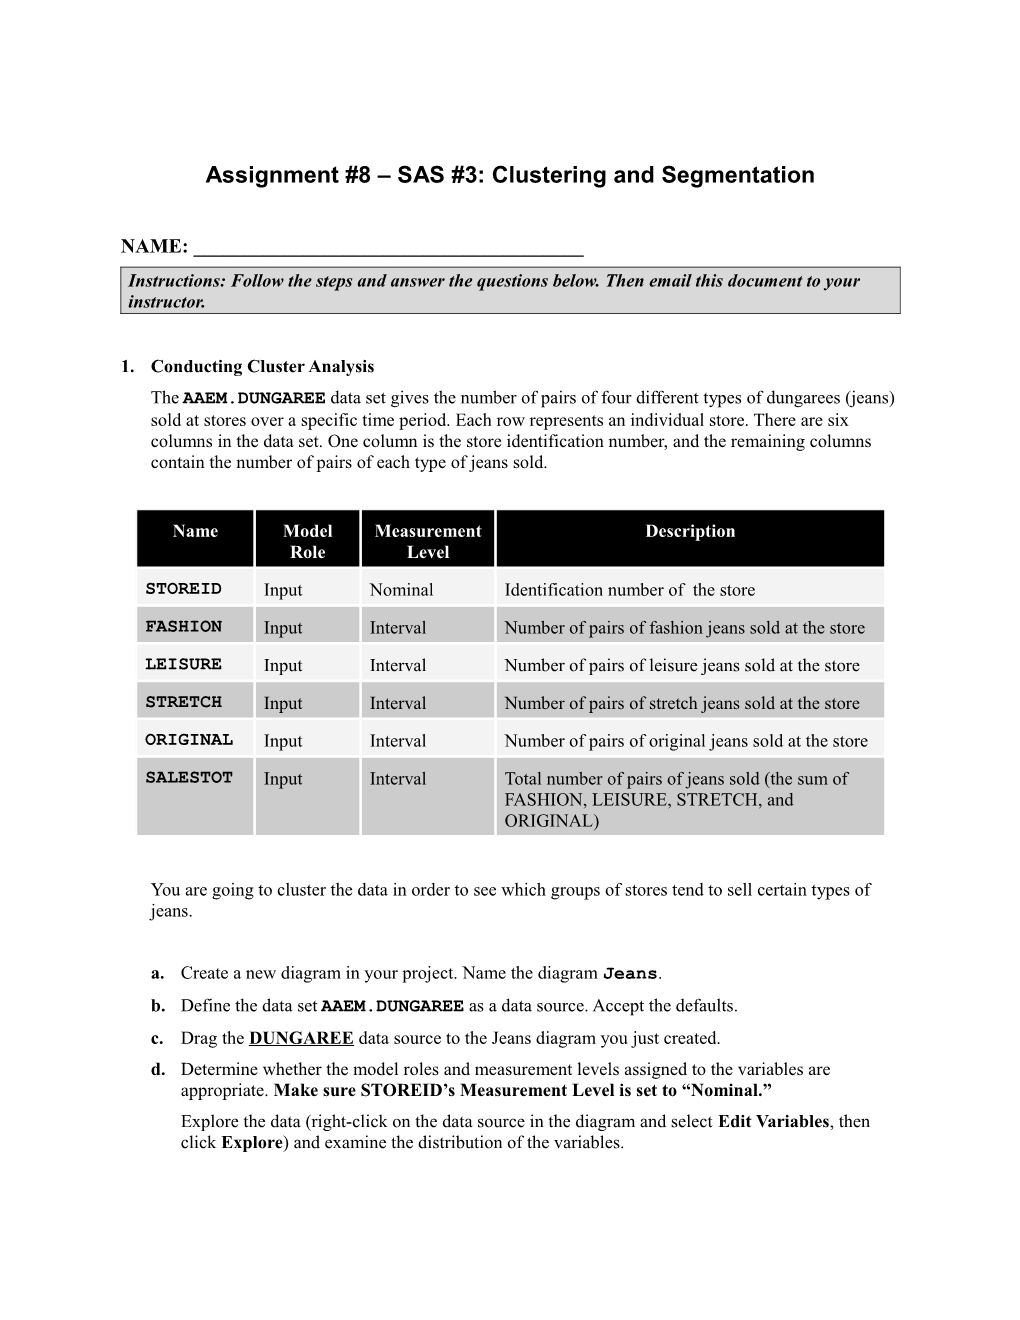 Assignment #8 SAS #3: Clustering and Segmentation